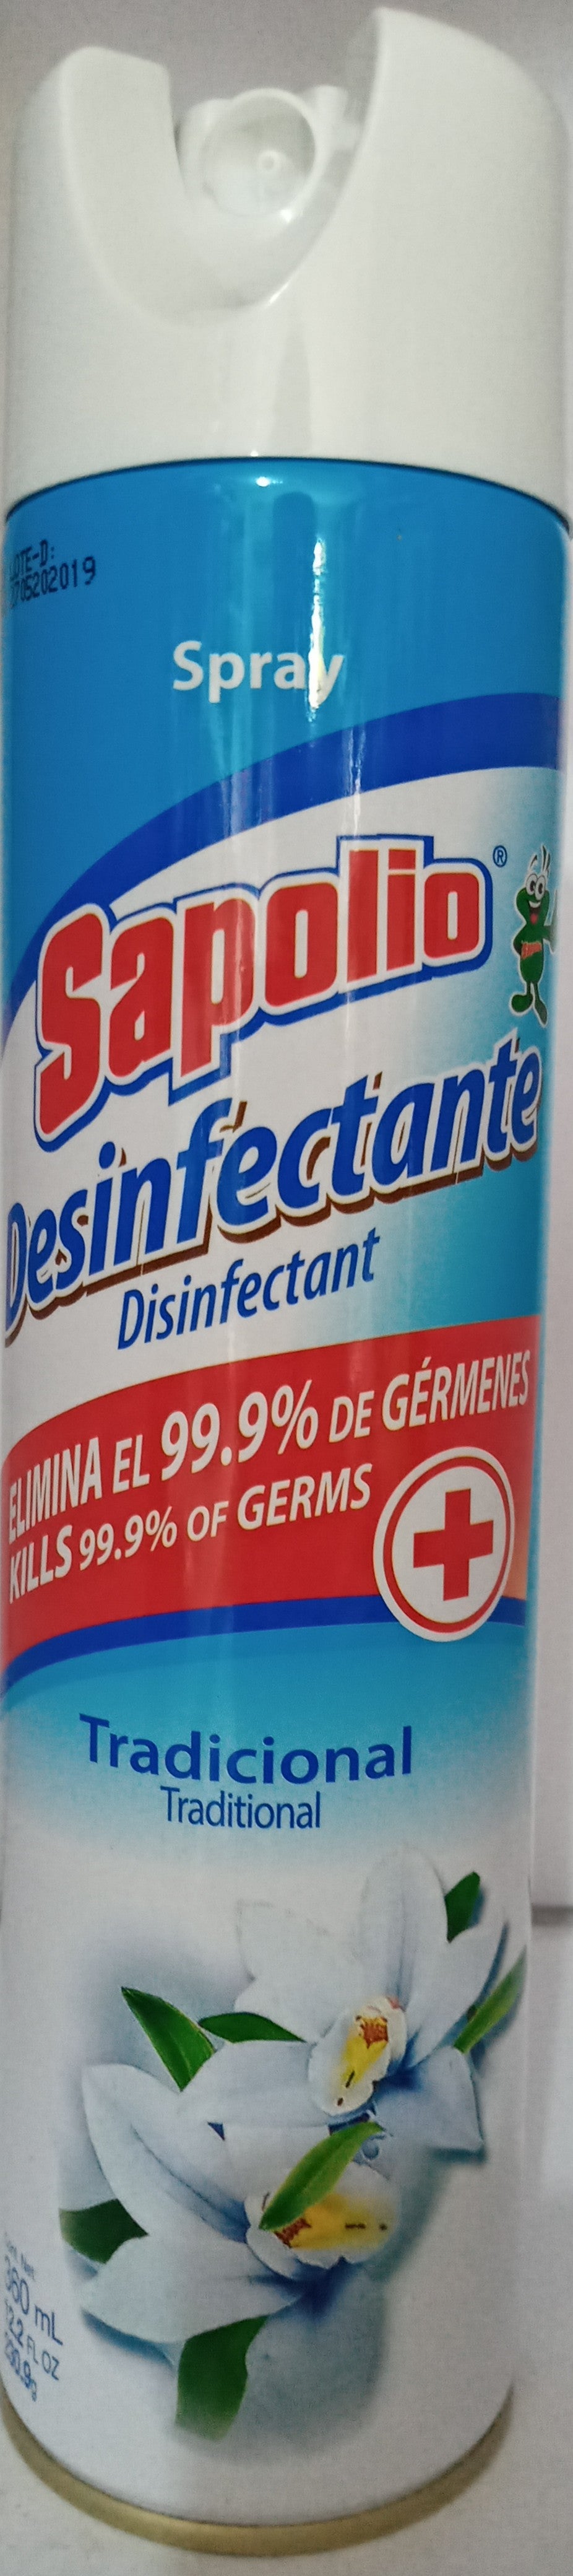 Desinfectante sapolio 360ml